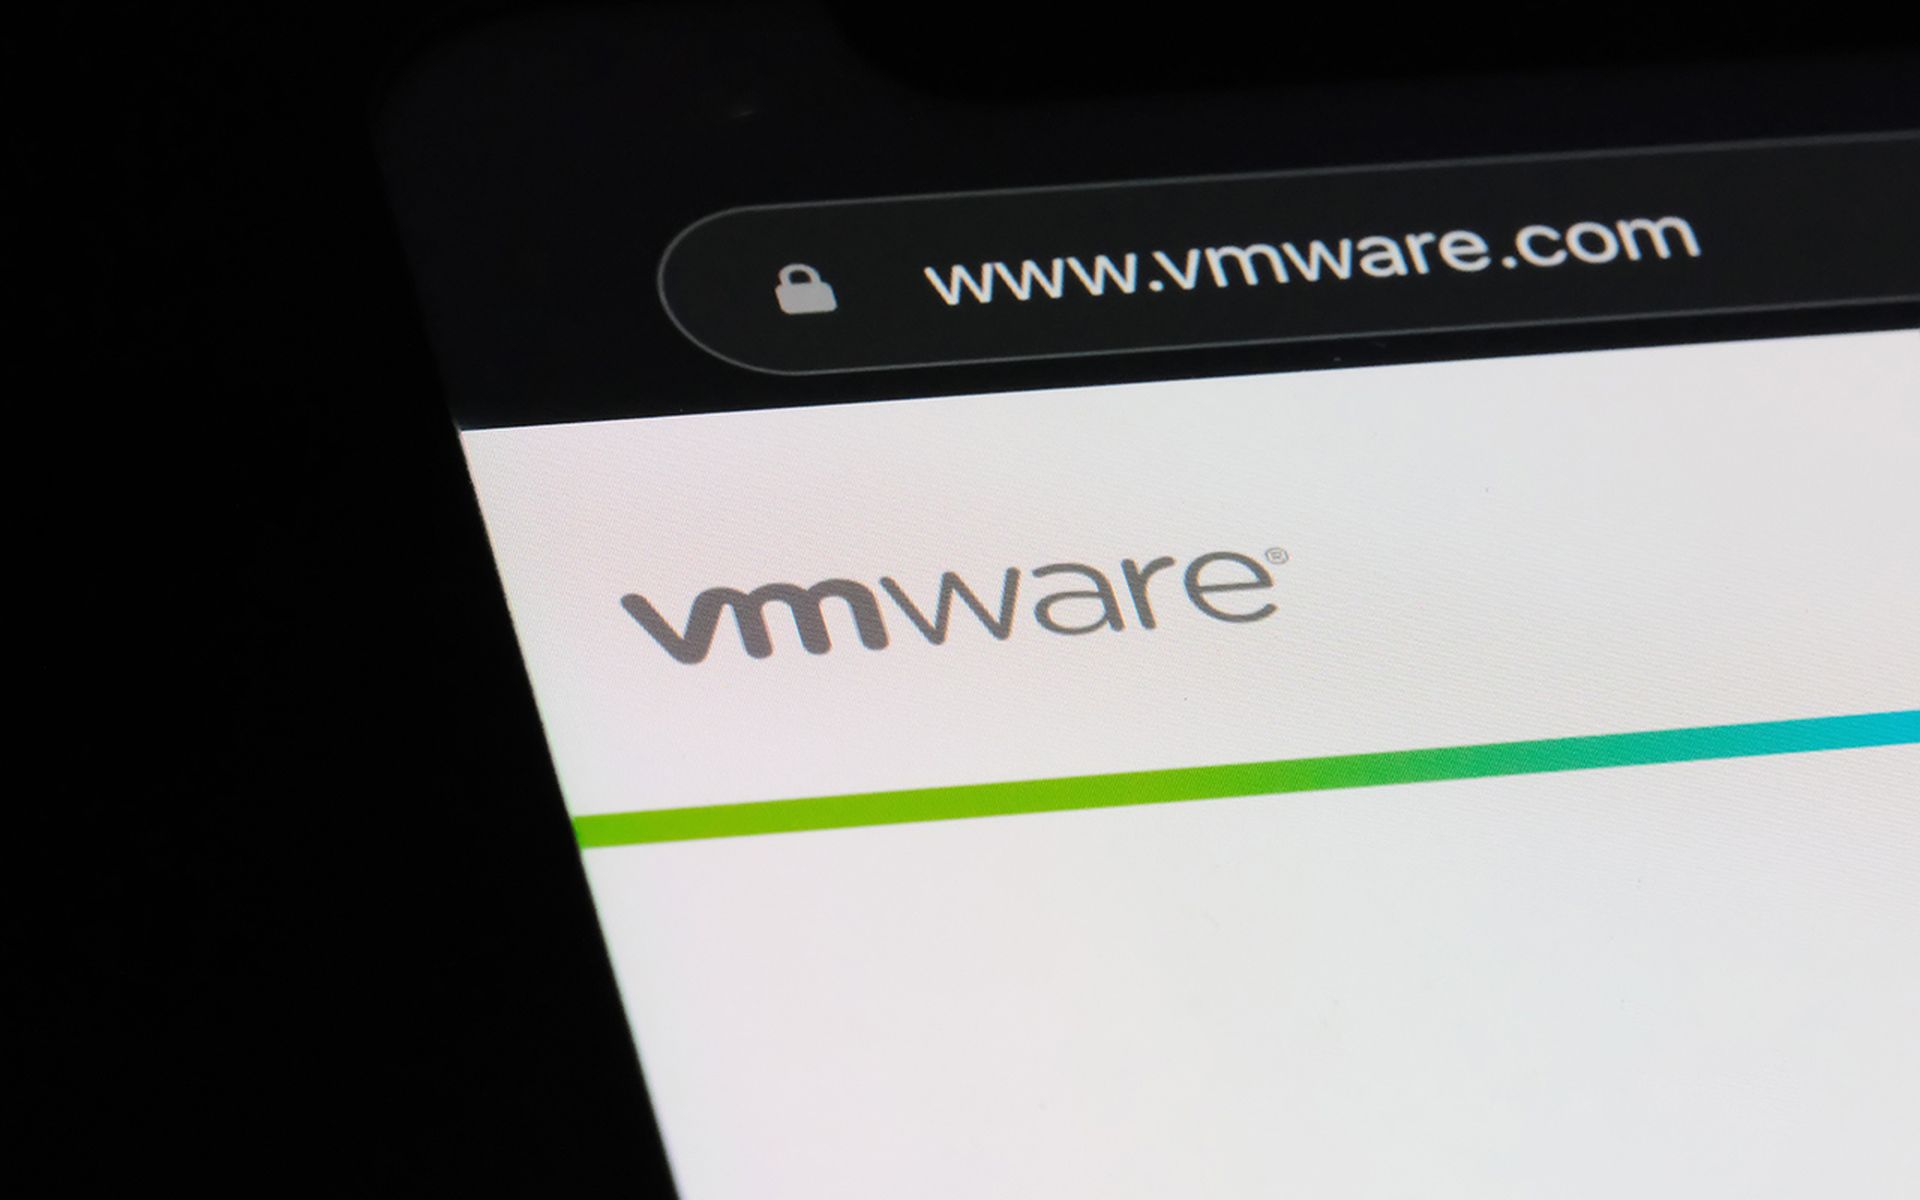 VMware company brand logo on official website